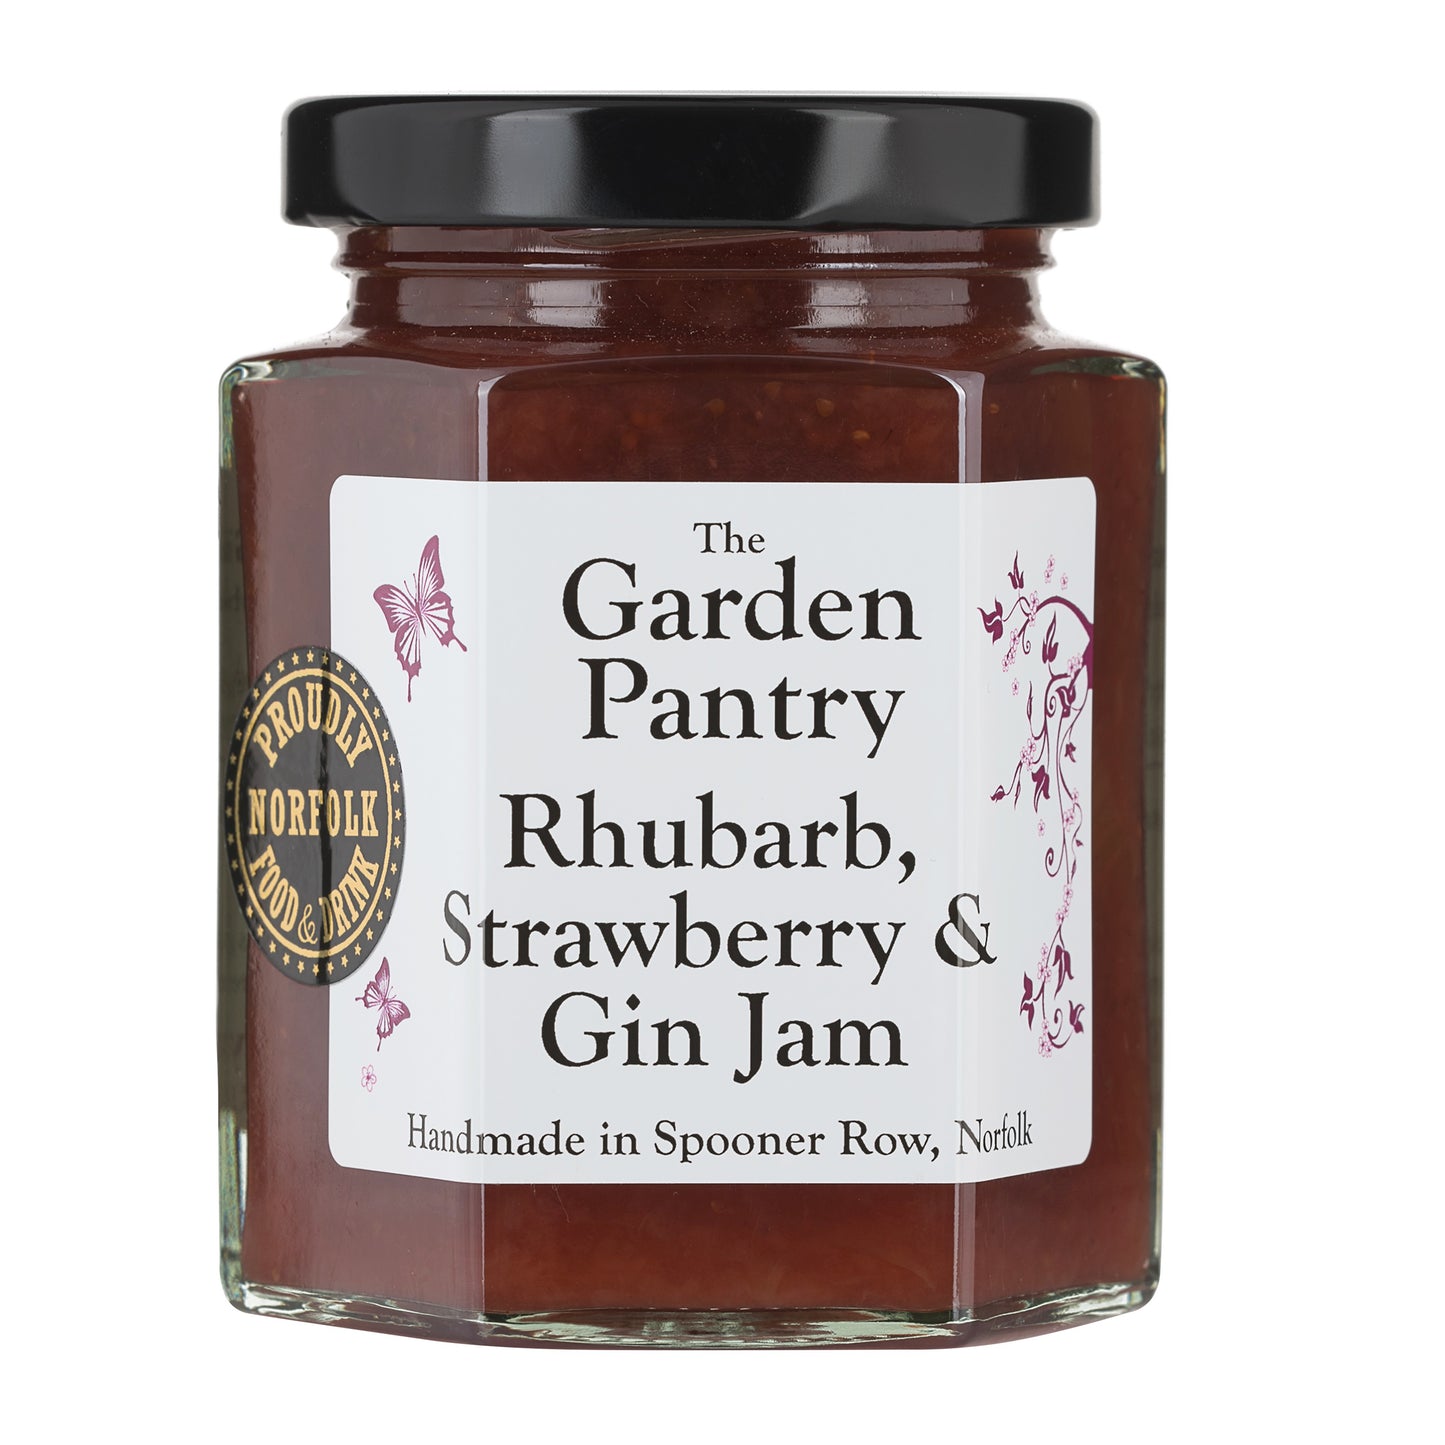 The Garden Pantry Rhubarb, Strawberry & Gin Jam